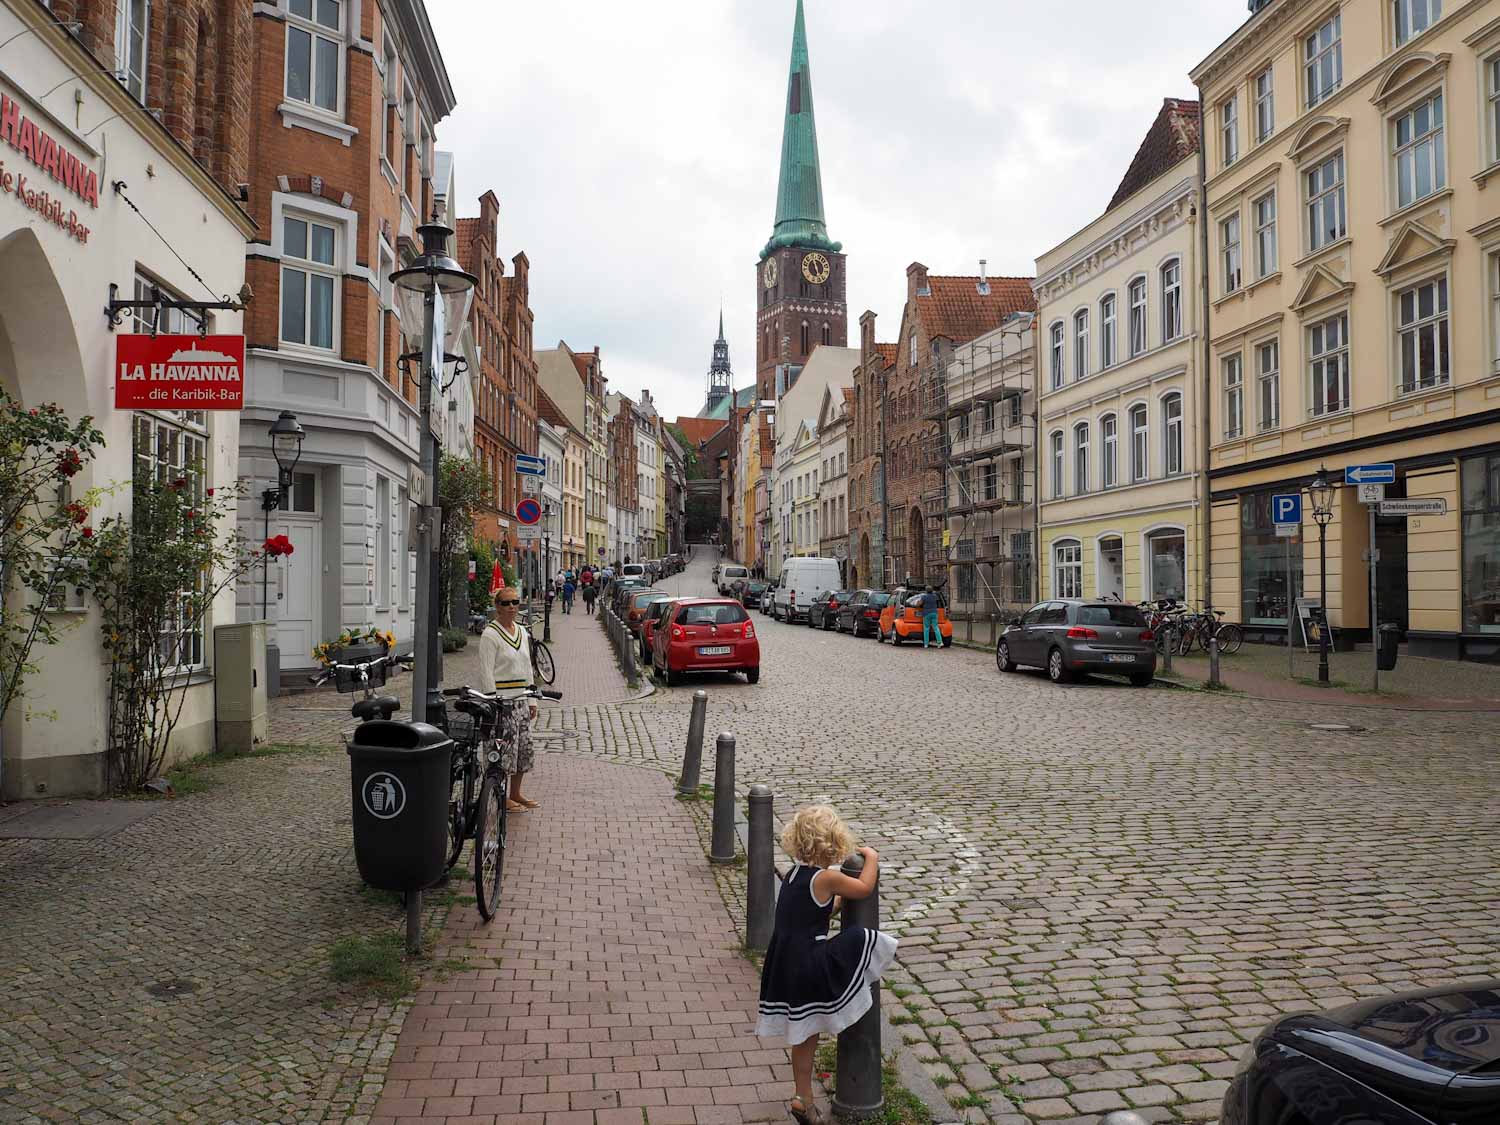 Small girl climbing on a bollard on a cobbled main street through a town